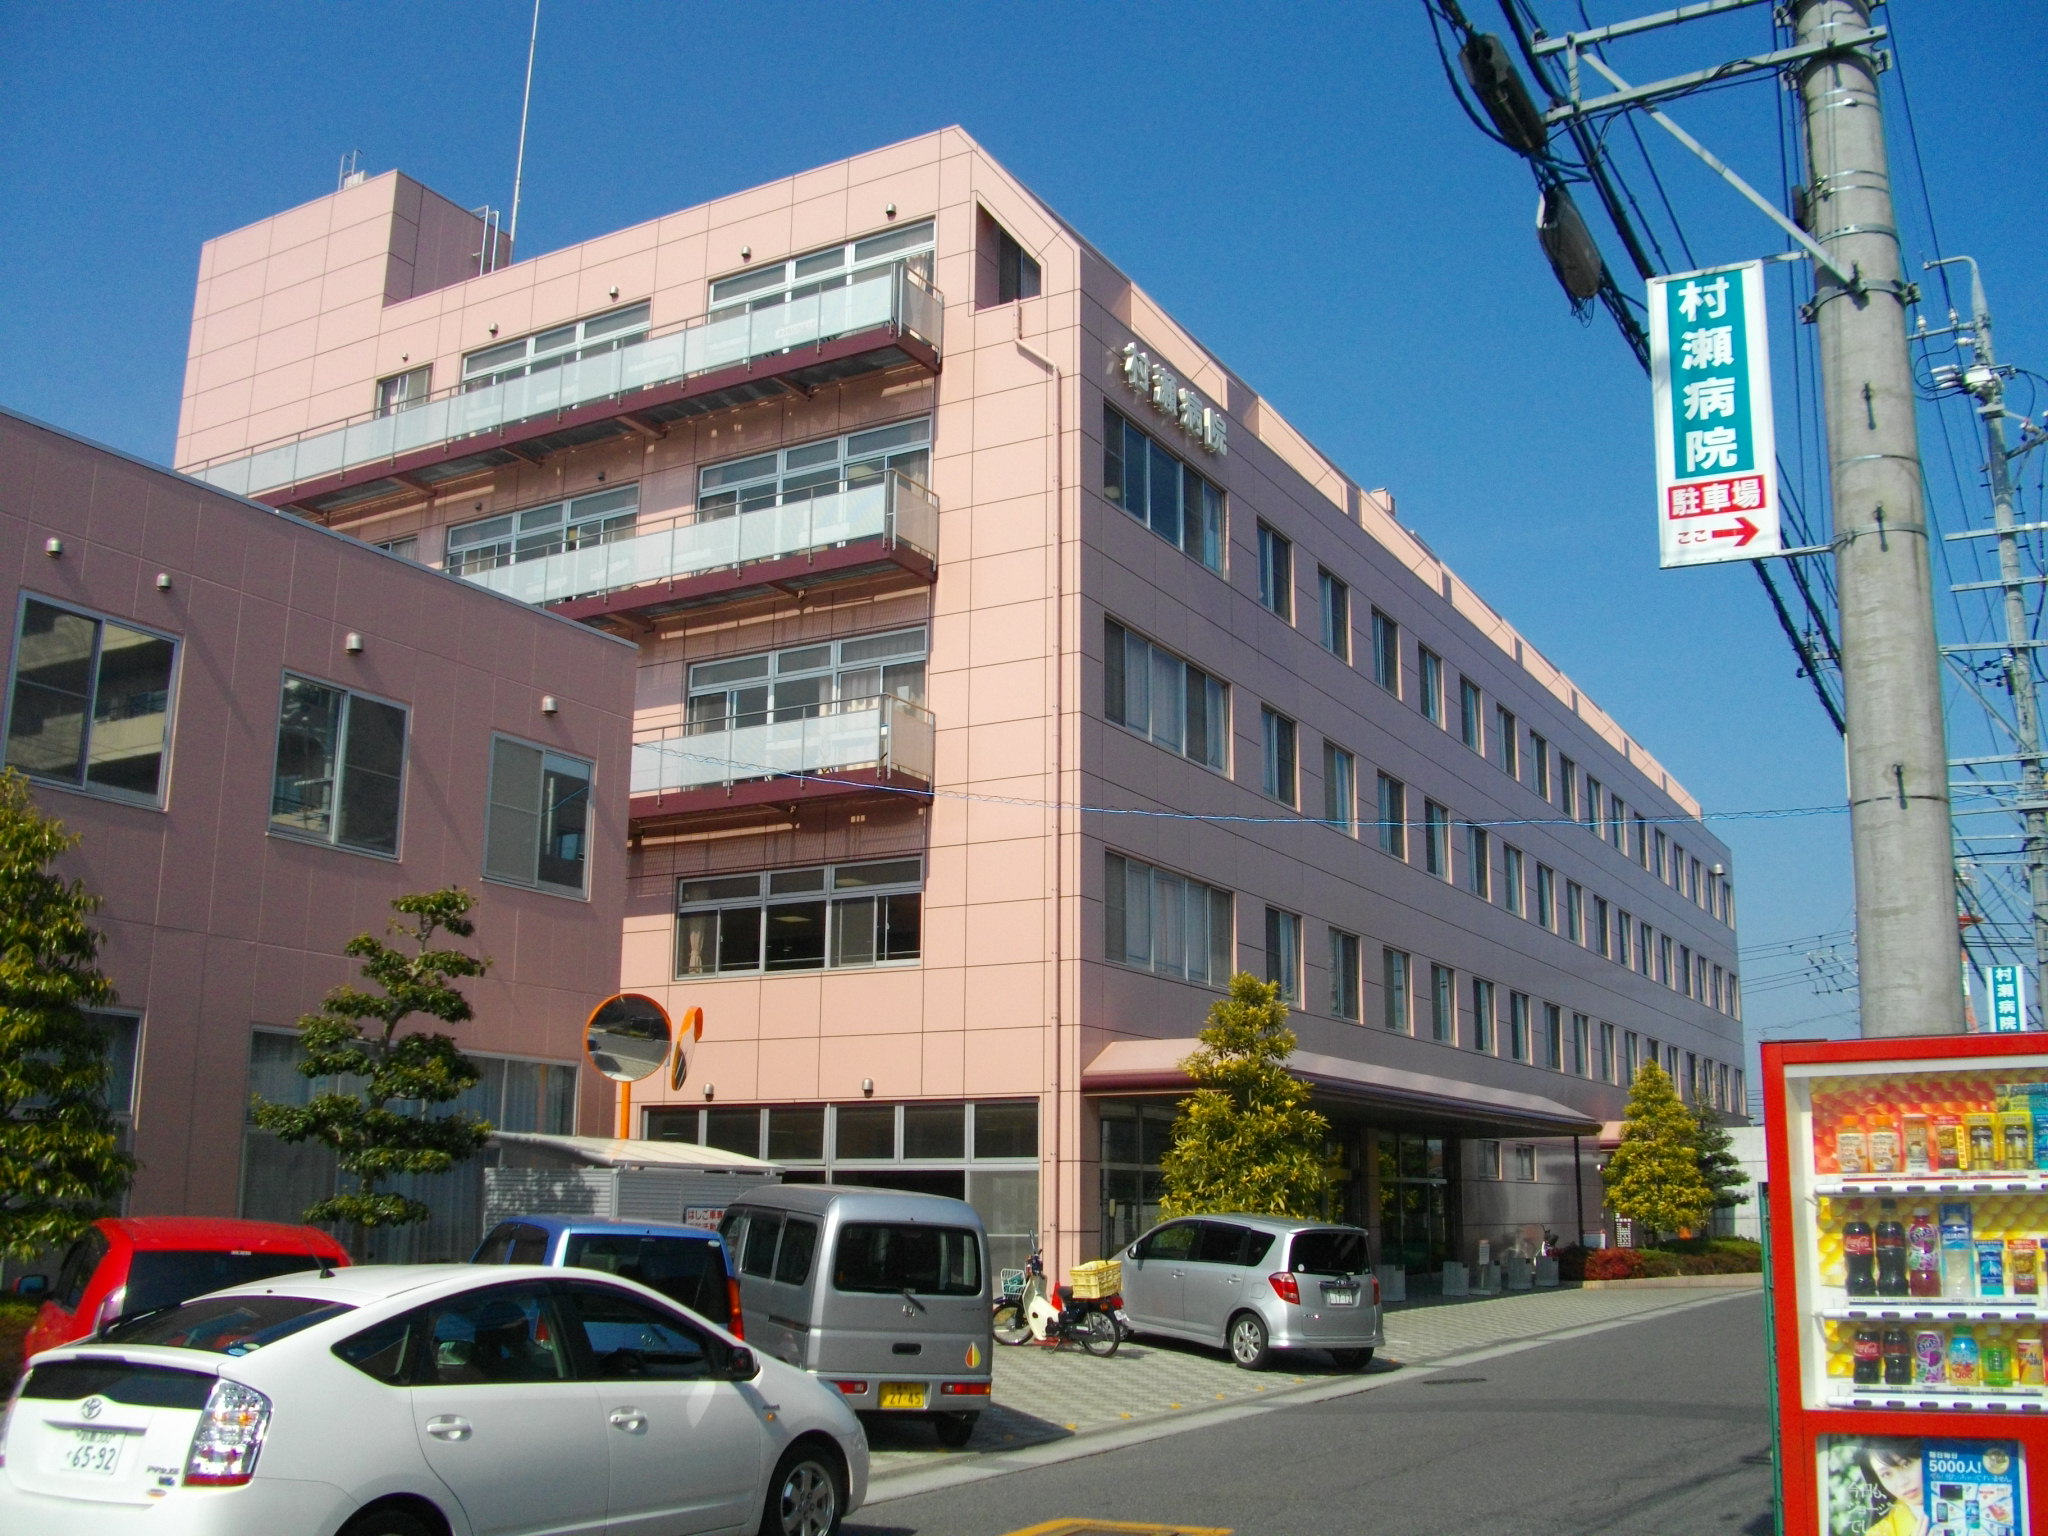 Hospital. 1200m until the medical corporation Hirohito Board Murase Hospital (Hospital)